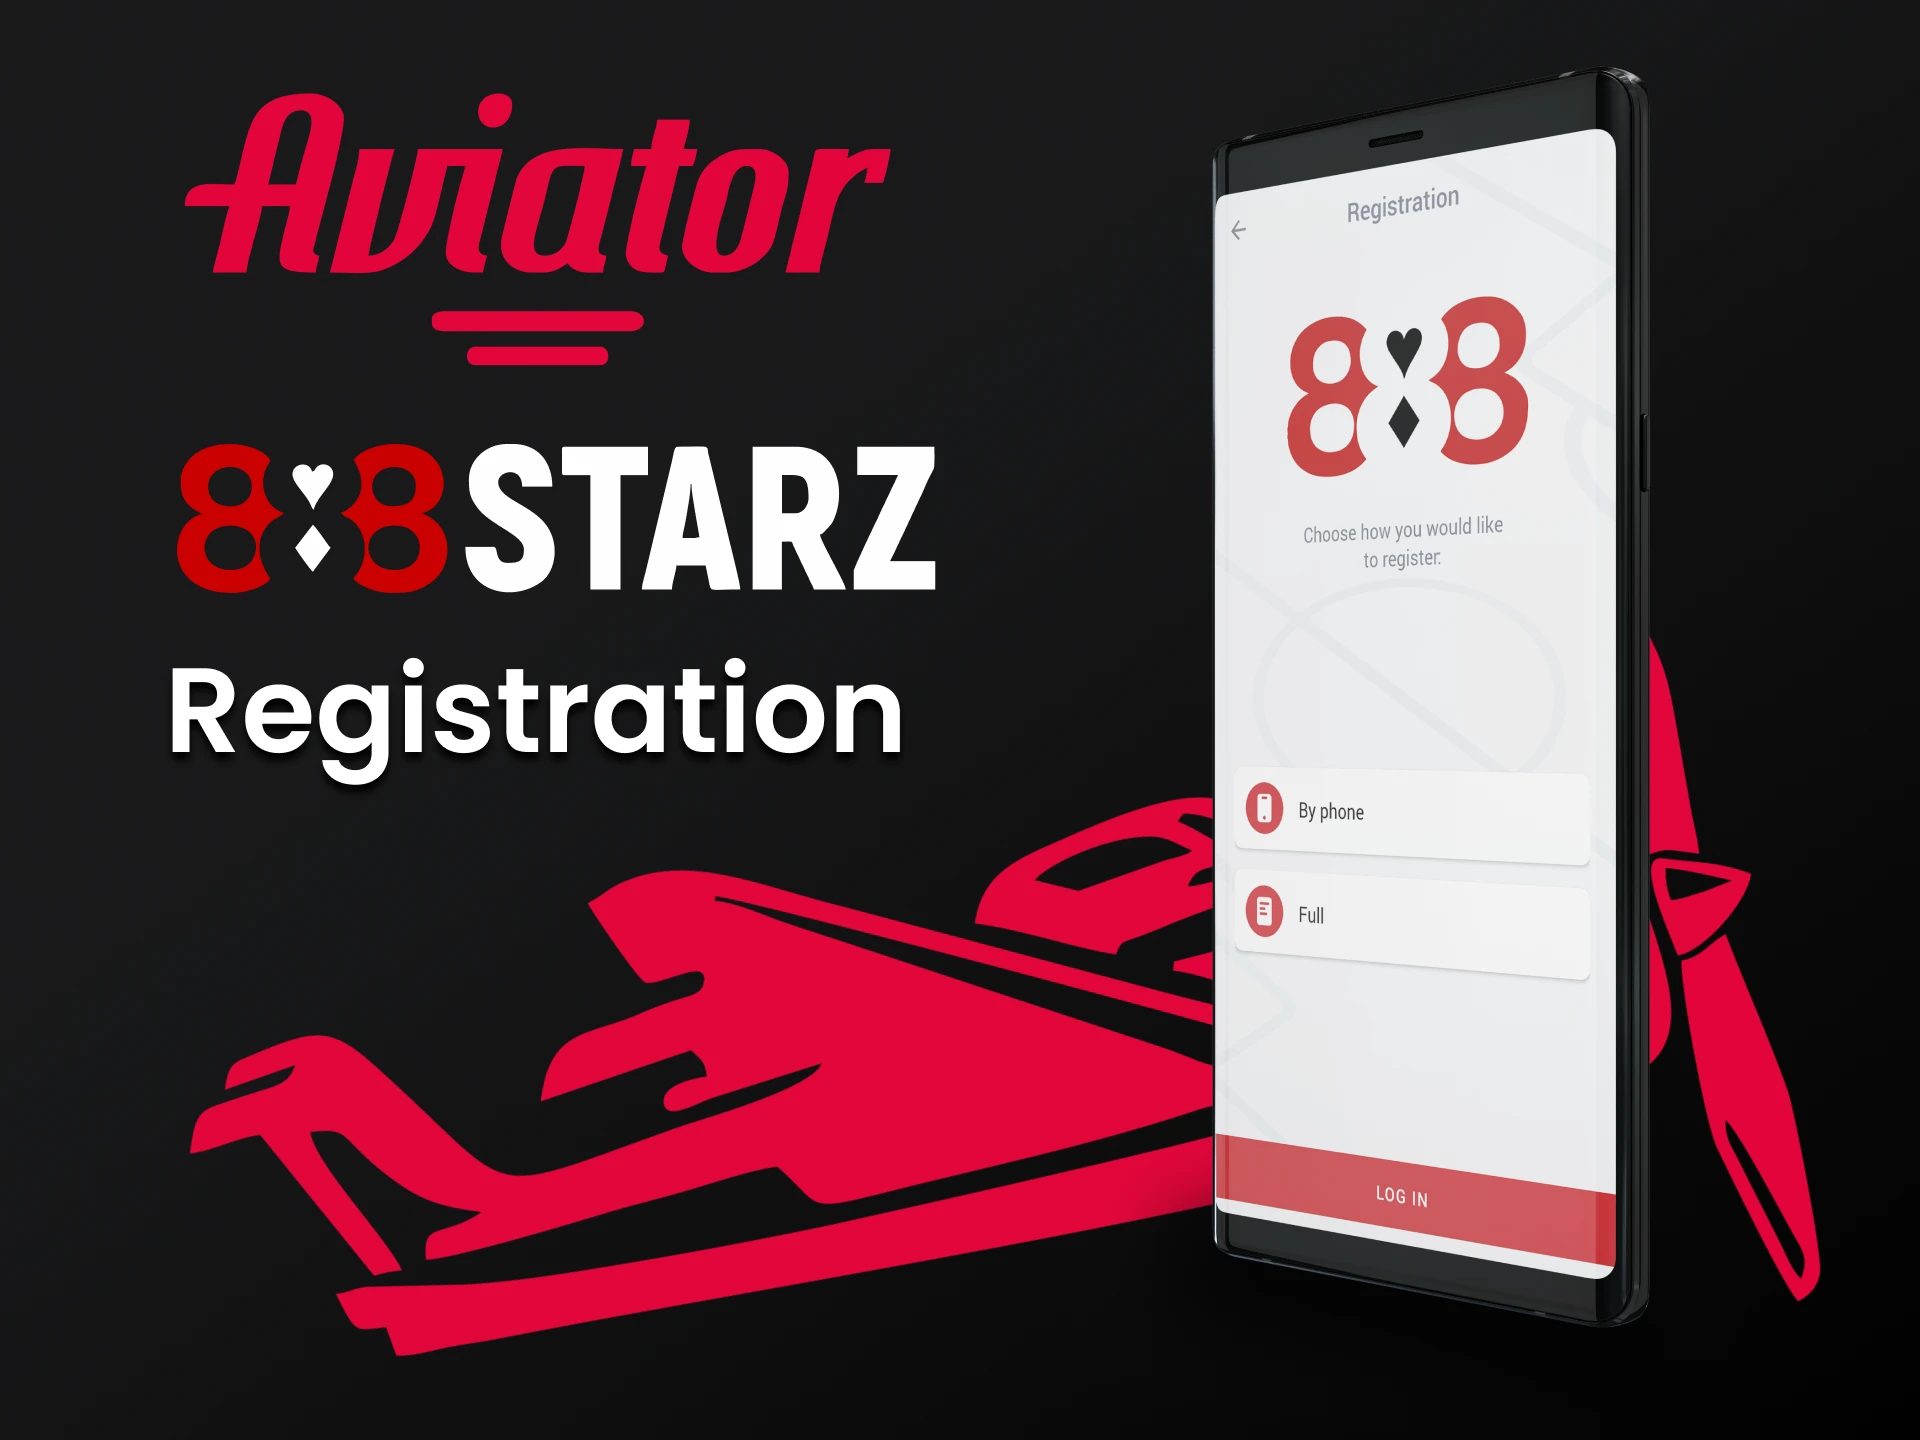 Register in the 888starz app to play Aviator.